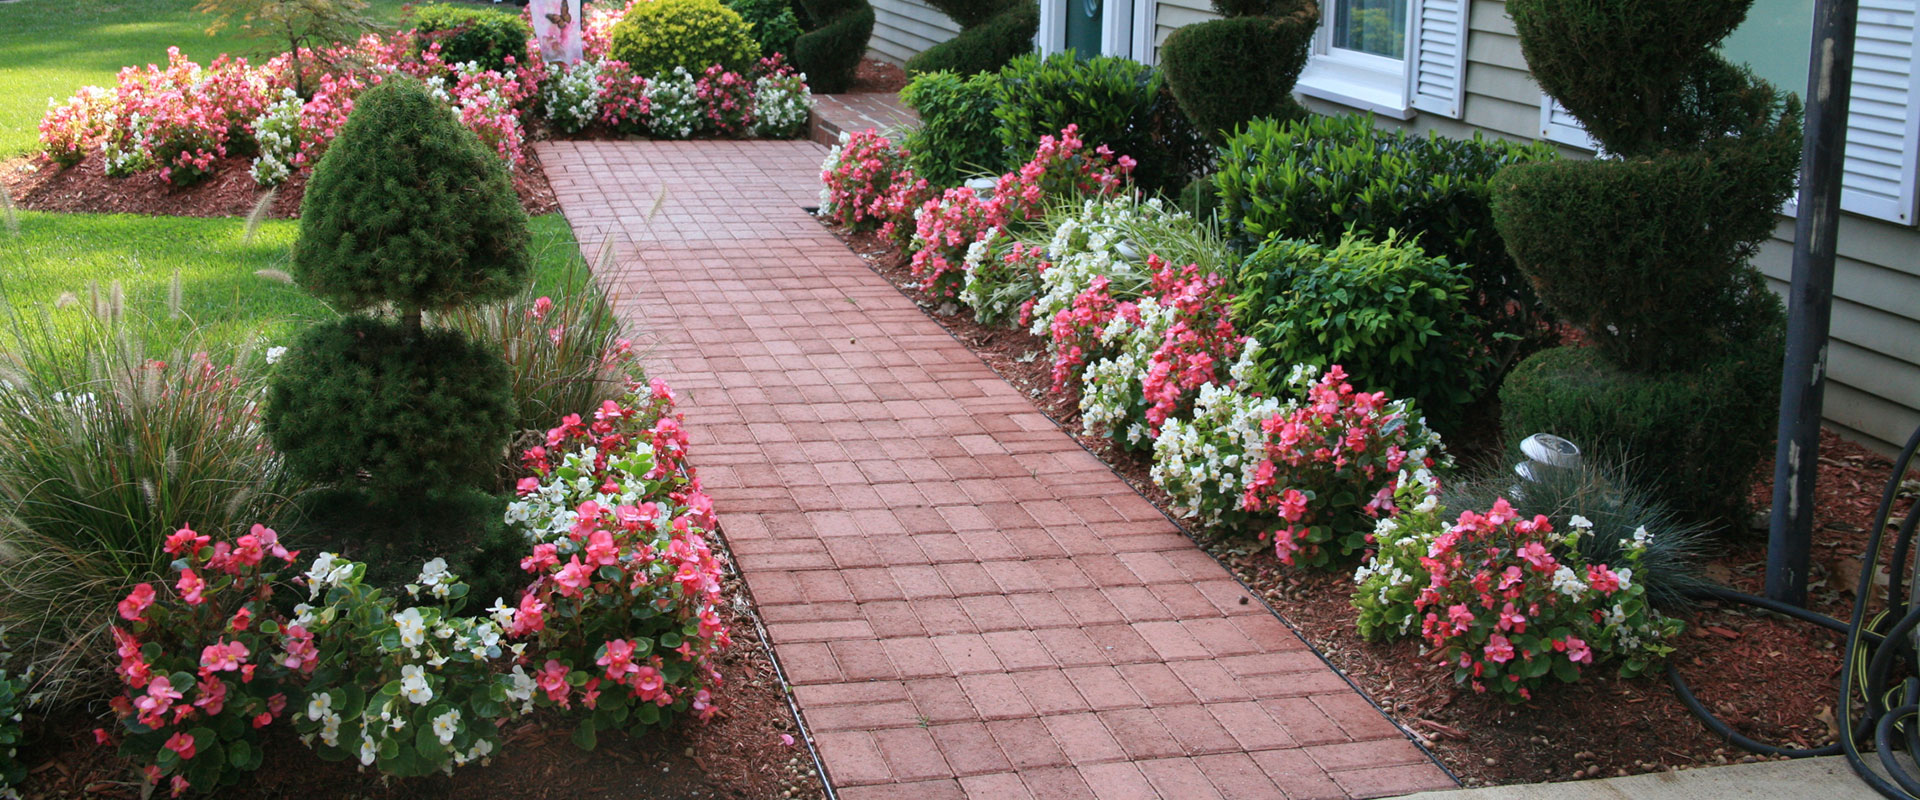 brick walkway with flowers